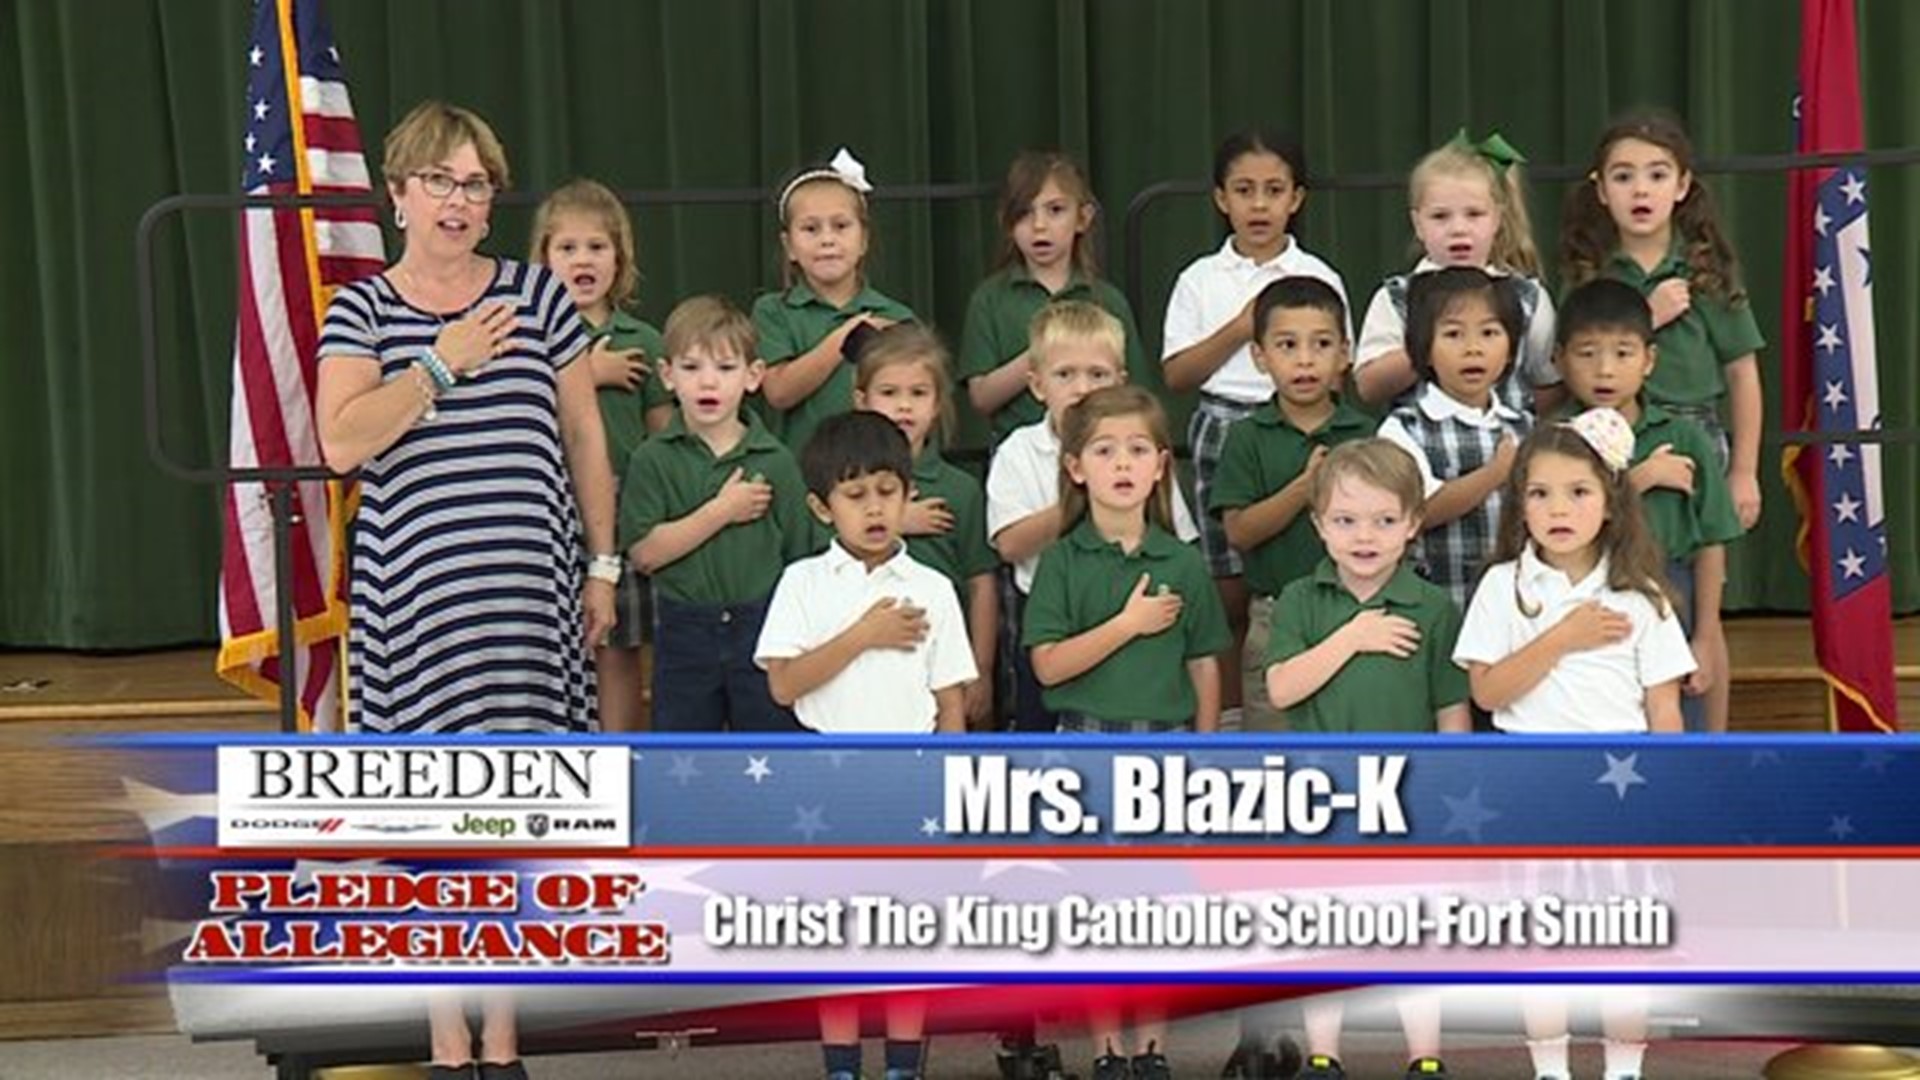 Christ the King Catholic School - Fort Smith - Mrs. Blazic - Kindergarten